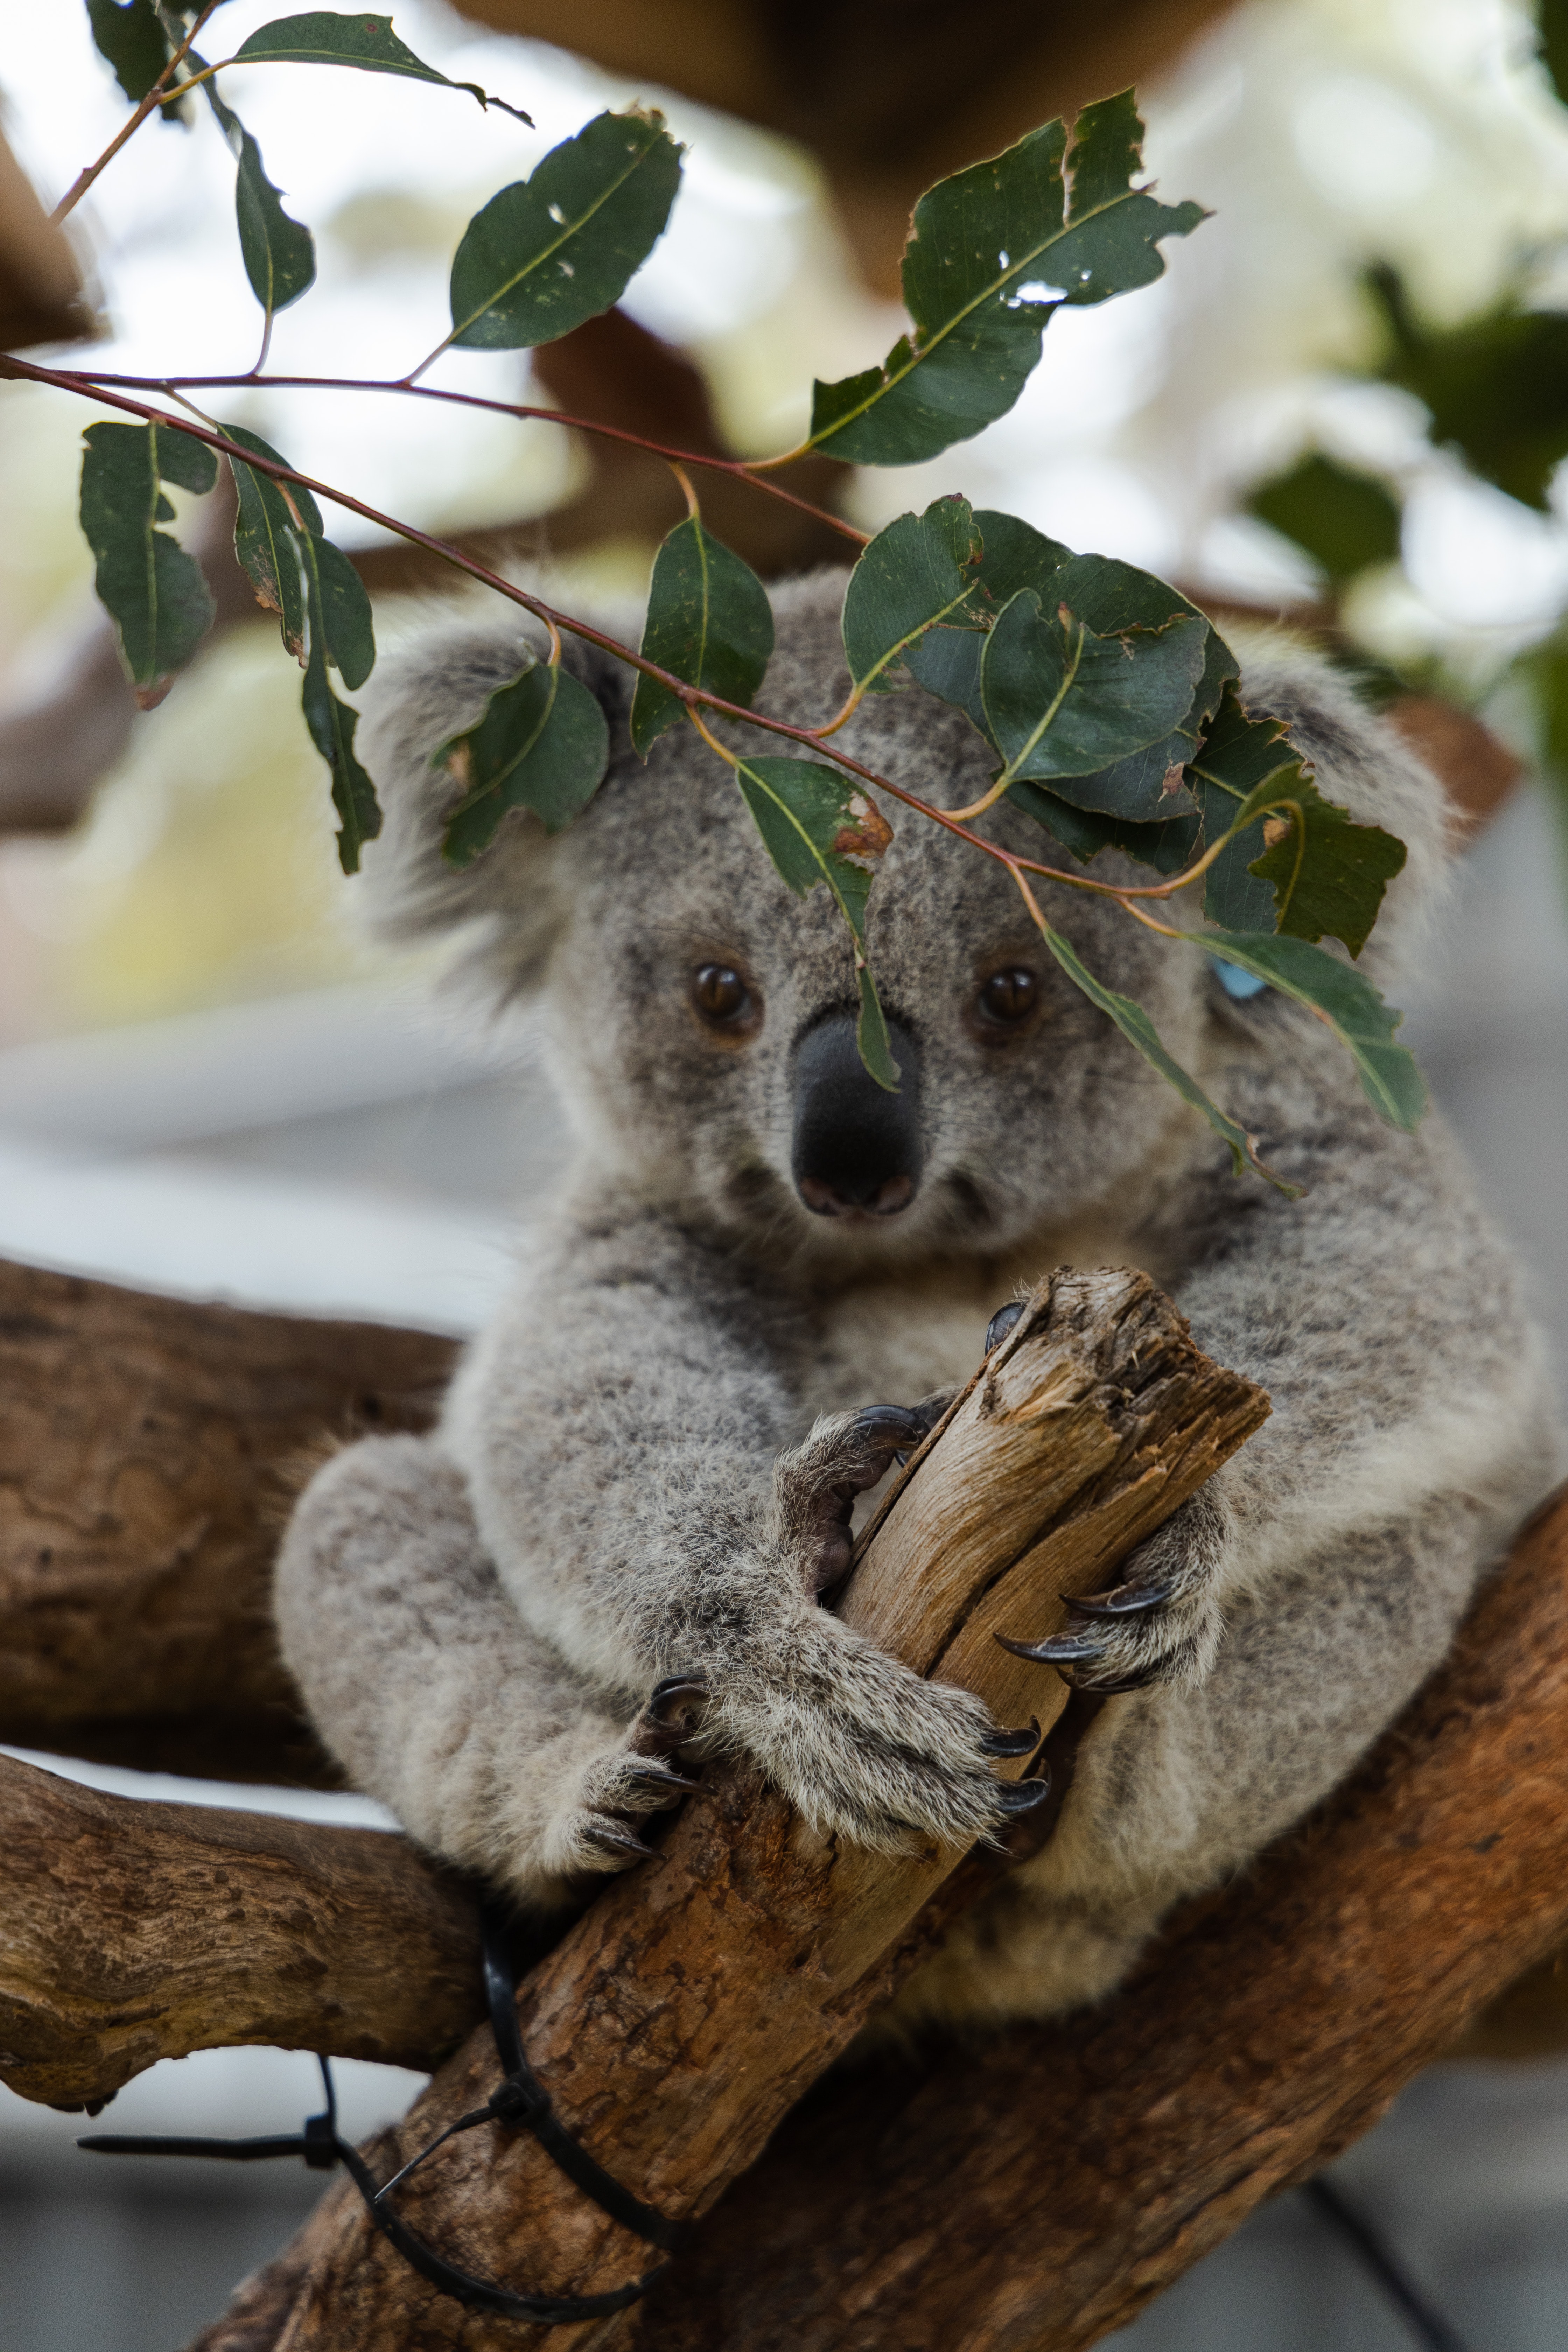 Australia says koalas are now an endangered species in two states